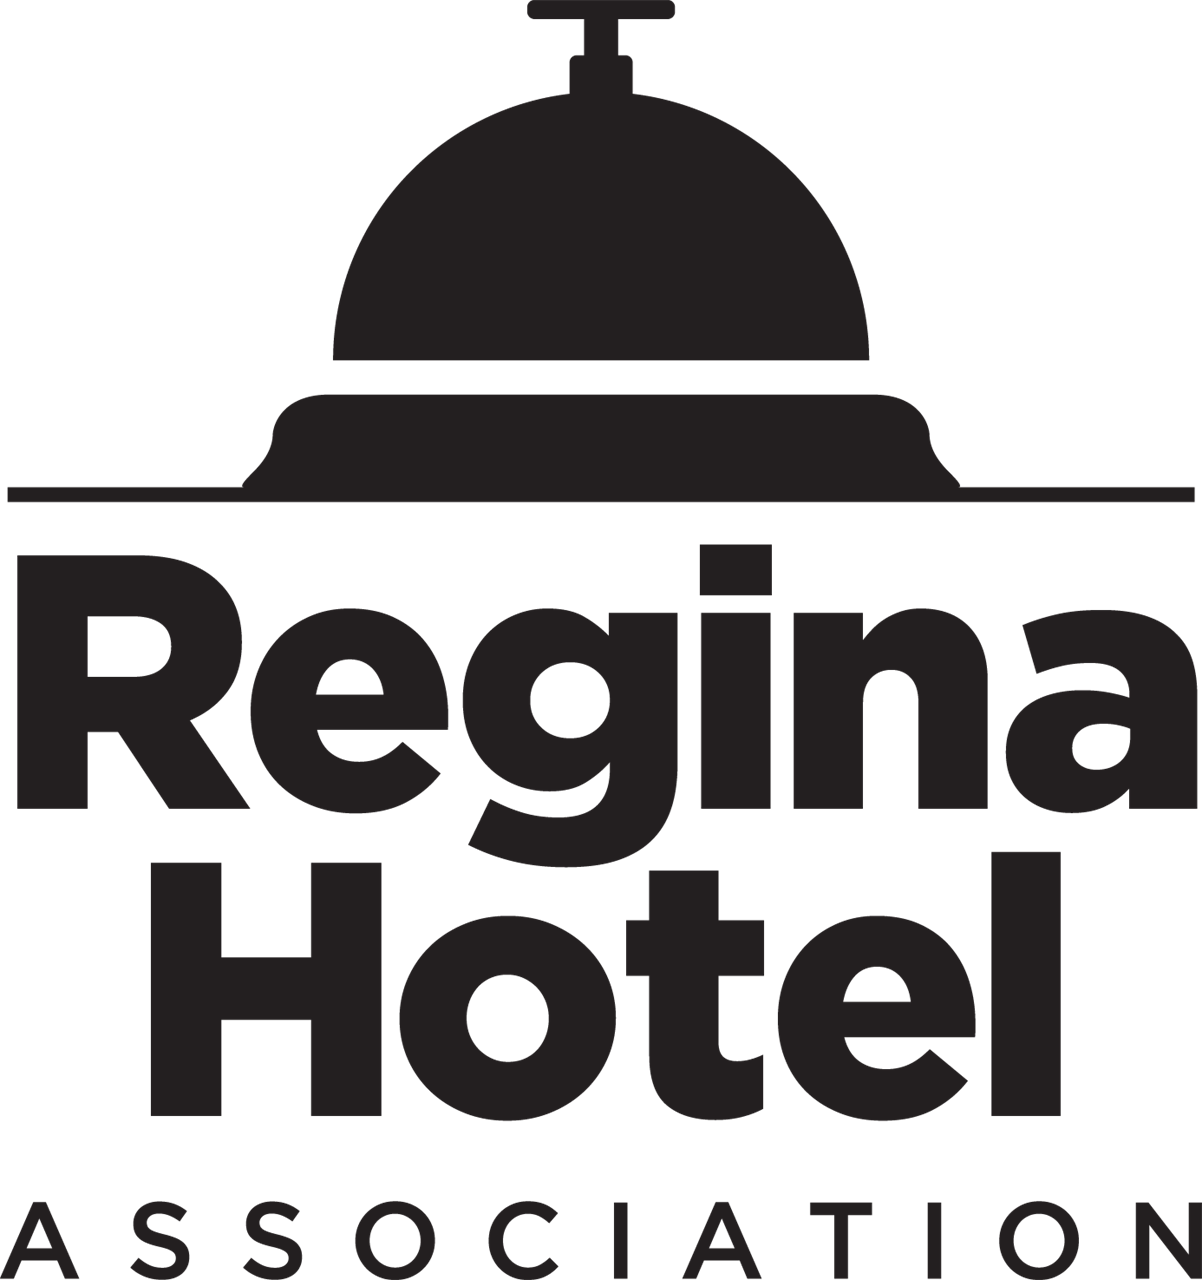 Regina-Hotel-Association-logo-and-link